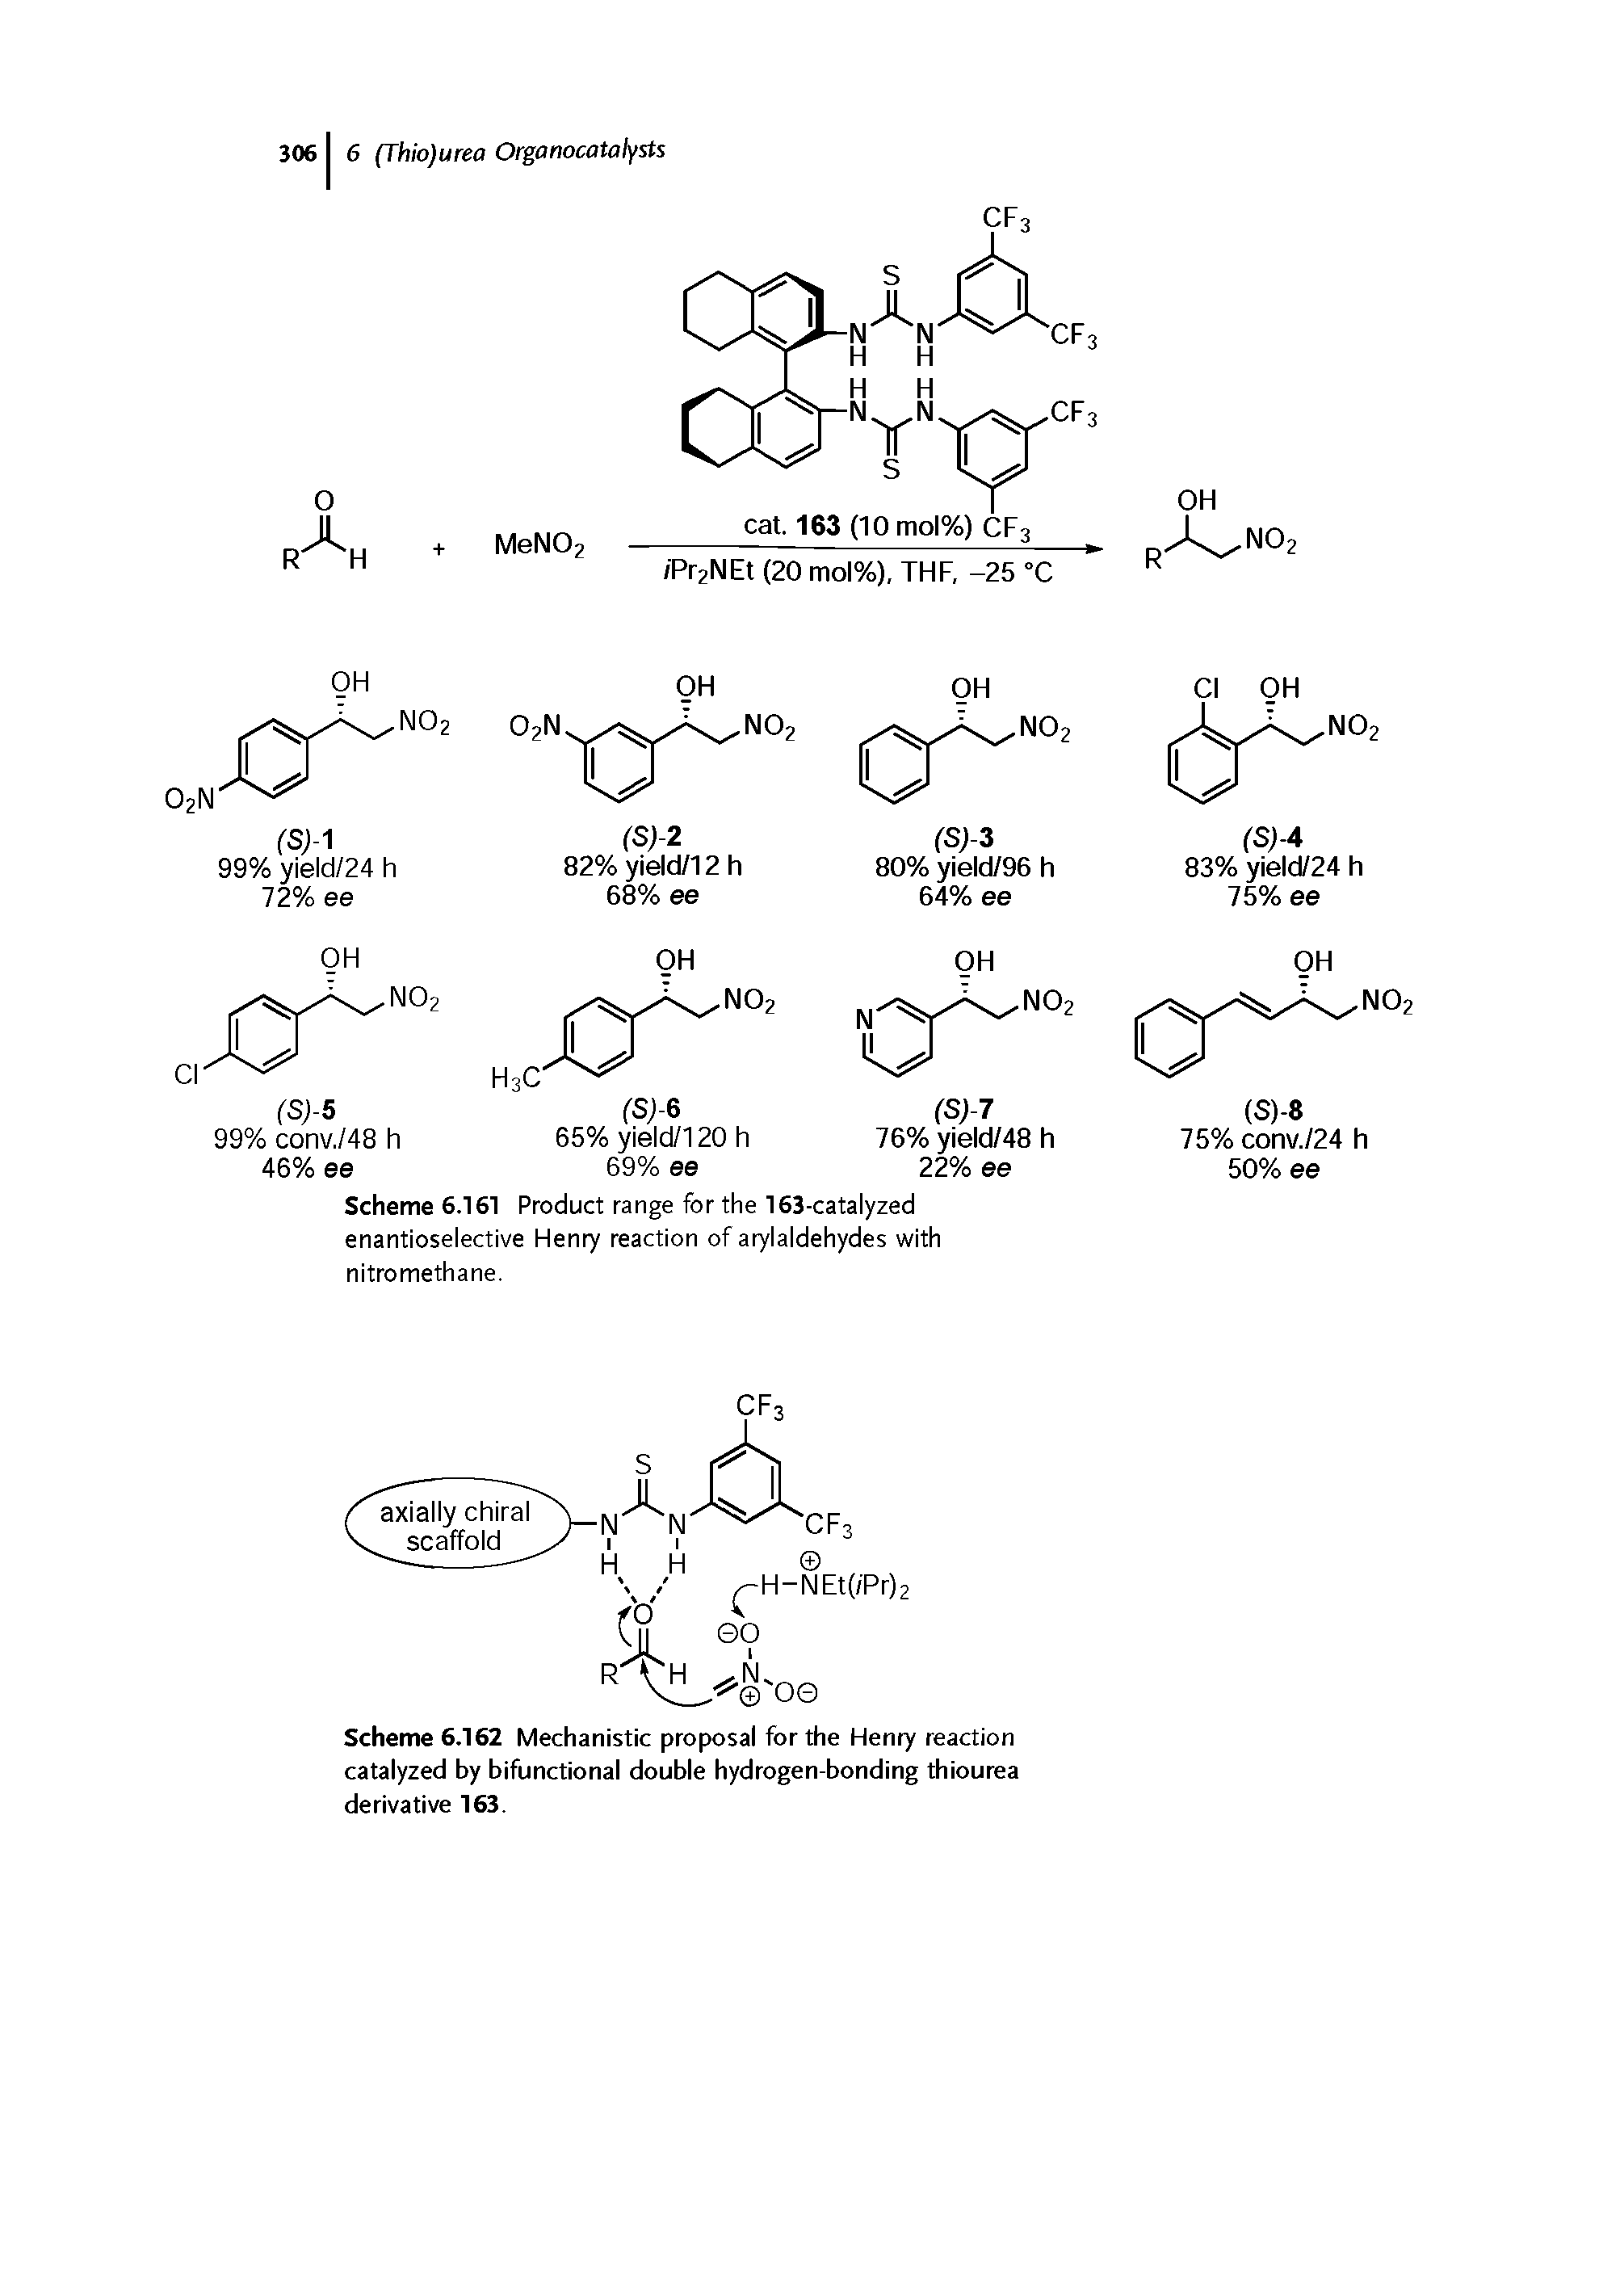 Scheme 6.161 Product range for the 163-catalyzed enantioselective Henry reaction of arylaldehydes with nitromethane.